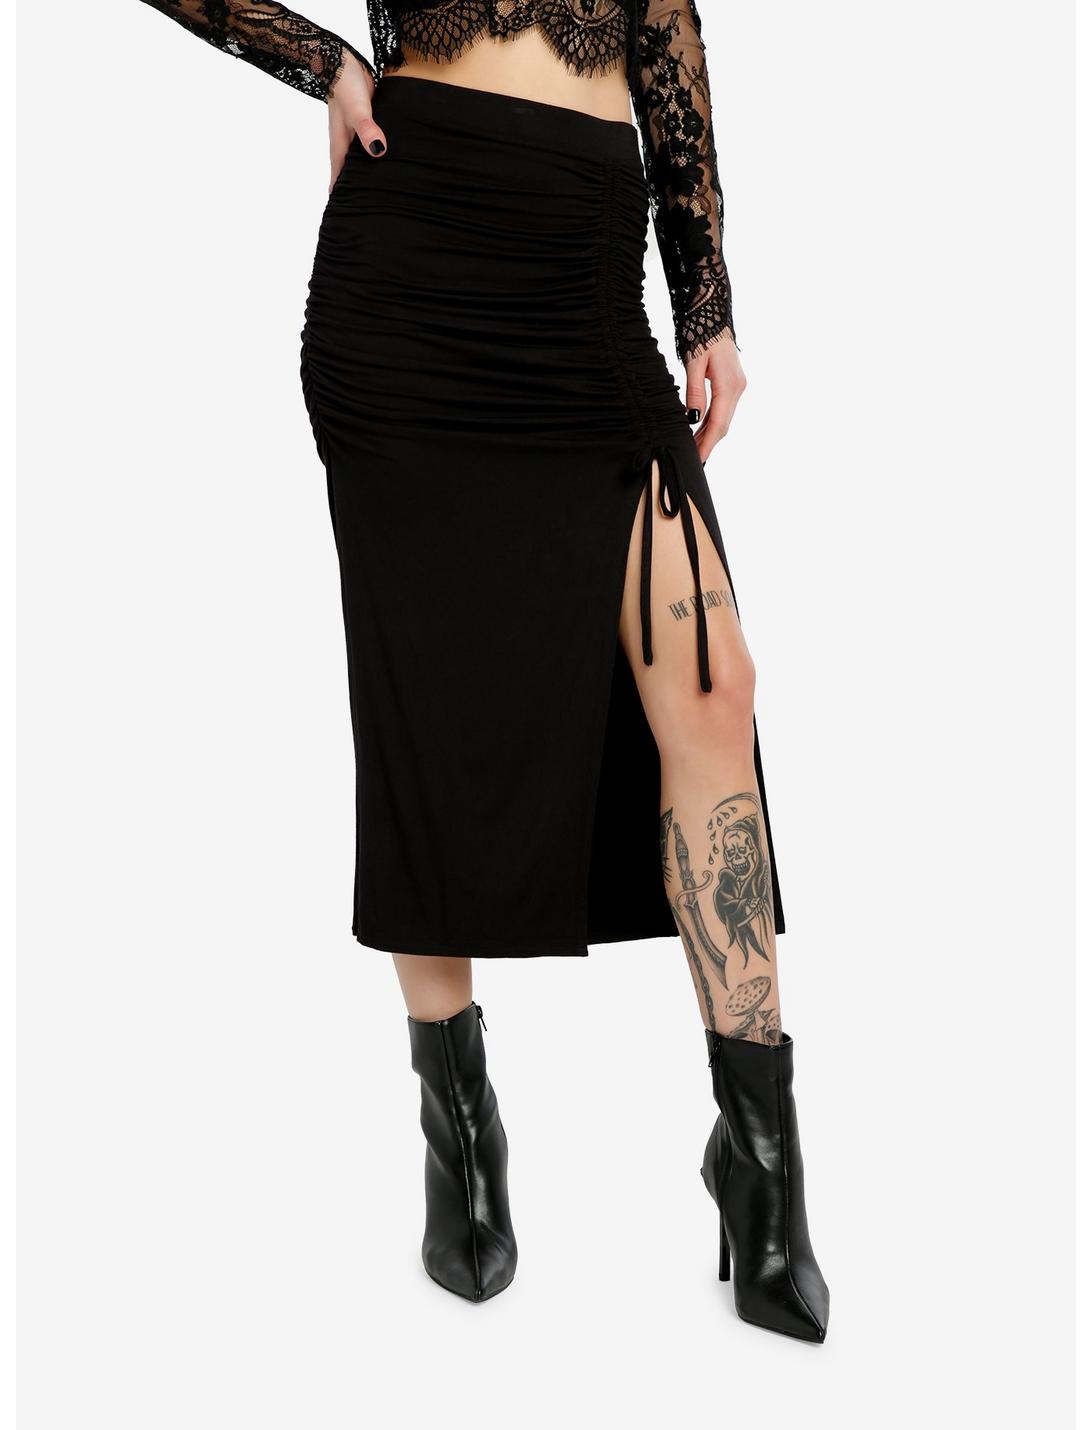 Cosmic Aura Black Ruched Midi Skirt, BLACK, hi-res